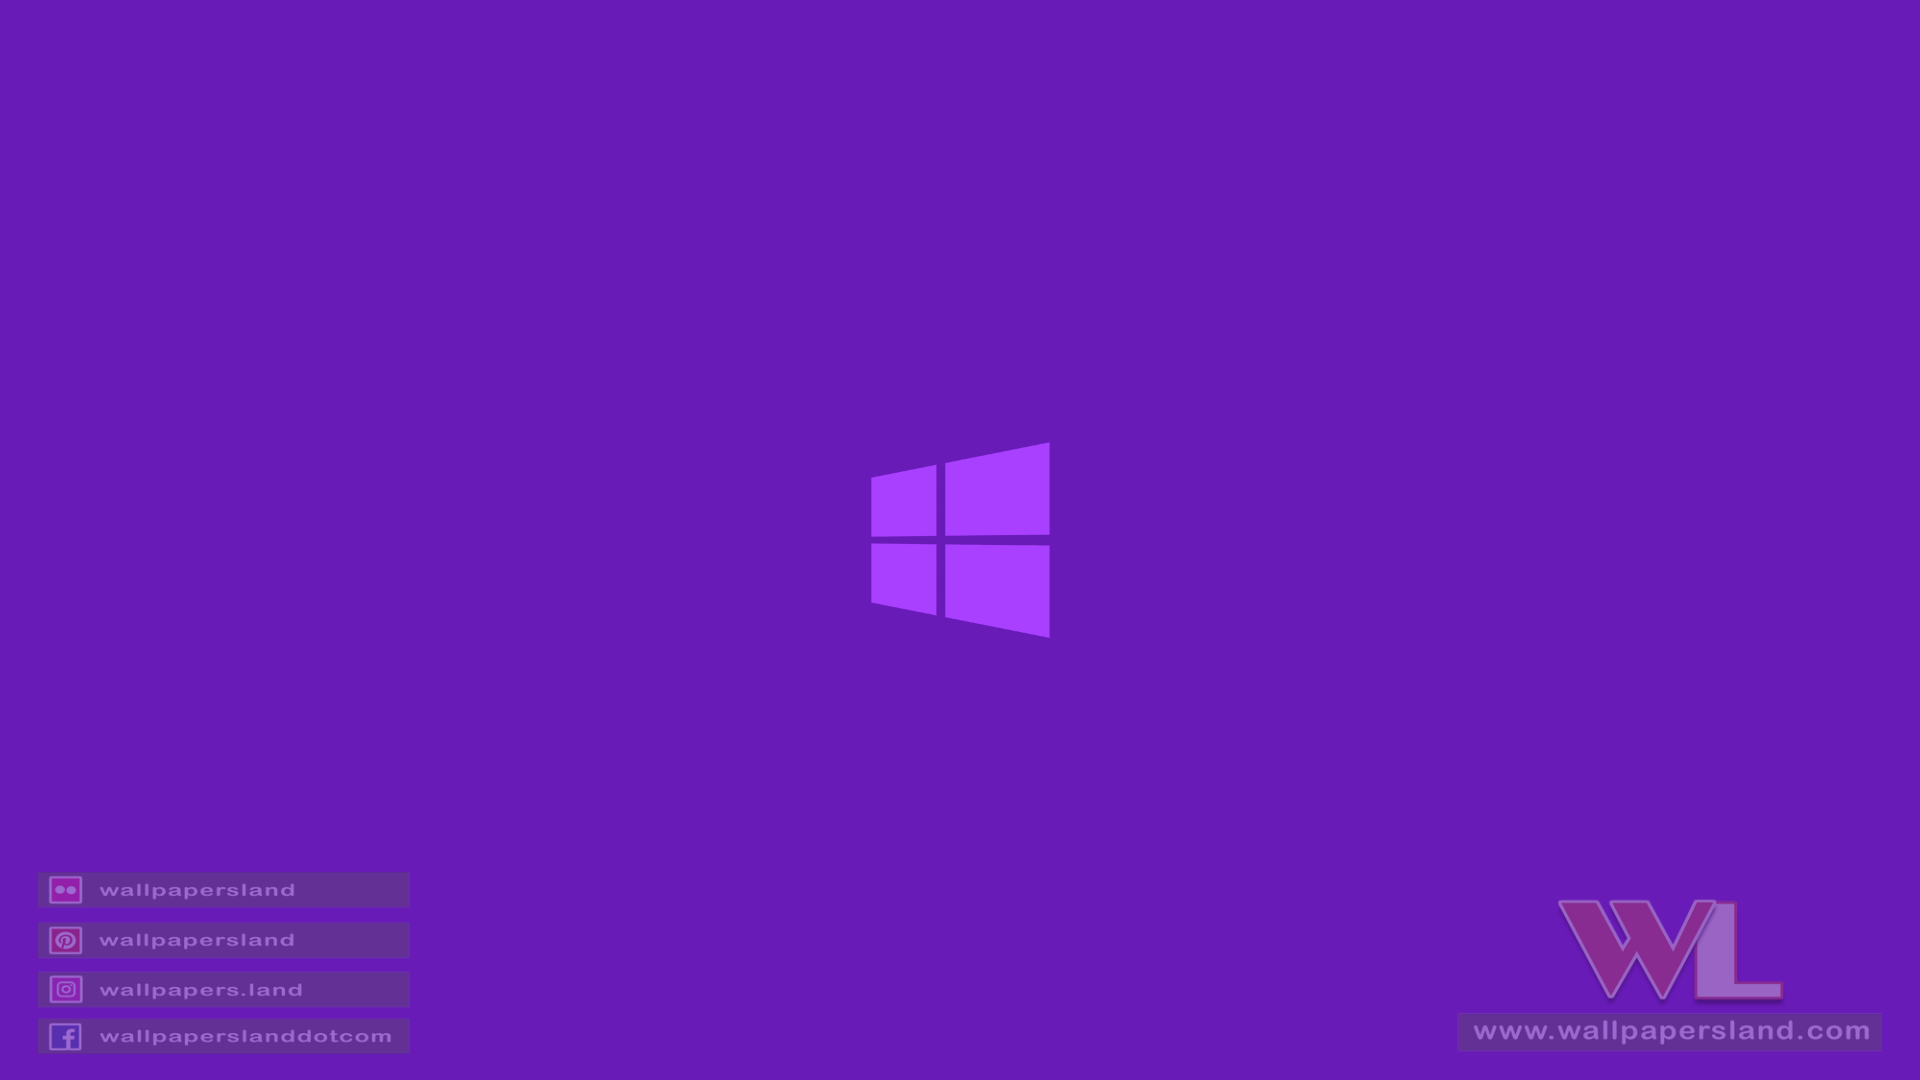 Windows 8 Wallpapers